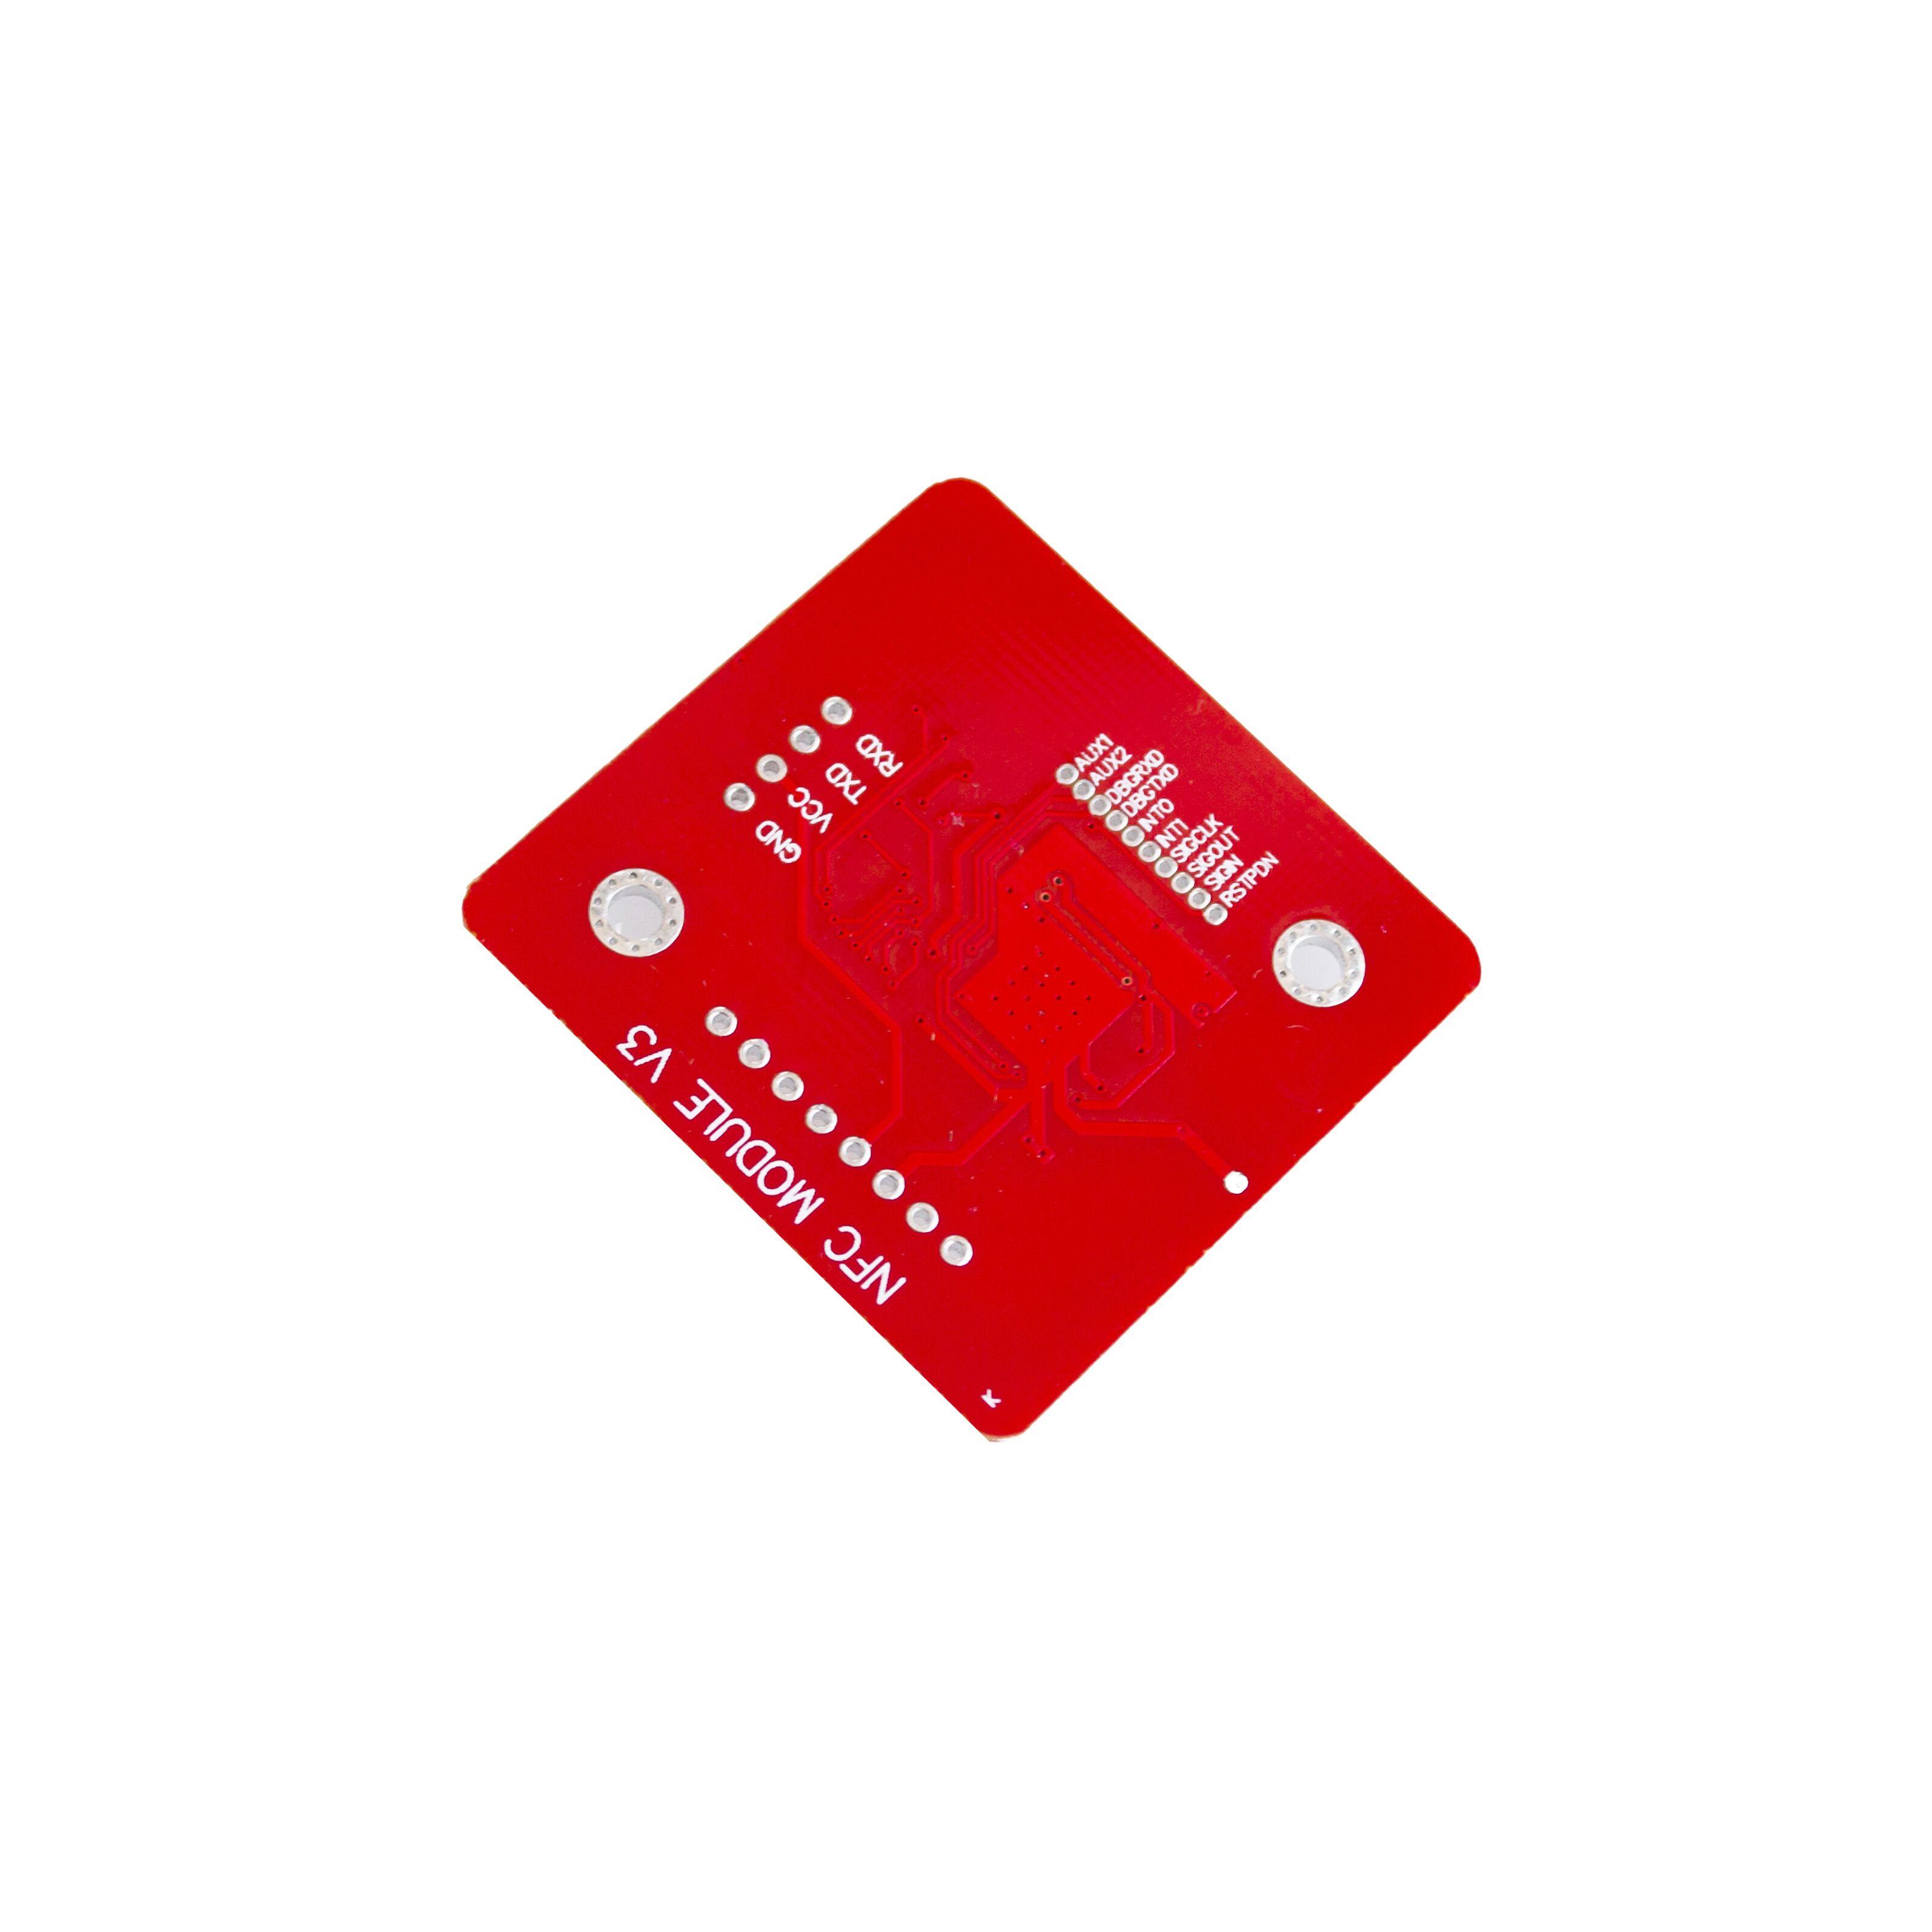 1Set-PN532-NFC-RFID-Wireless-Module-V3-User-Kits-Reader-Writer-Mode-IC-S50-Card-PCB-Attenna-I2C-IIC-SPI-HSU-For-Arduino